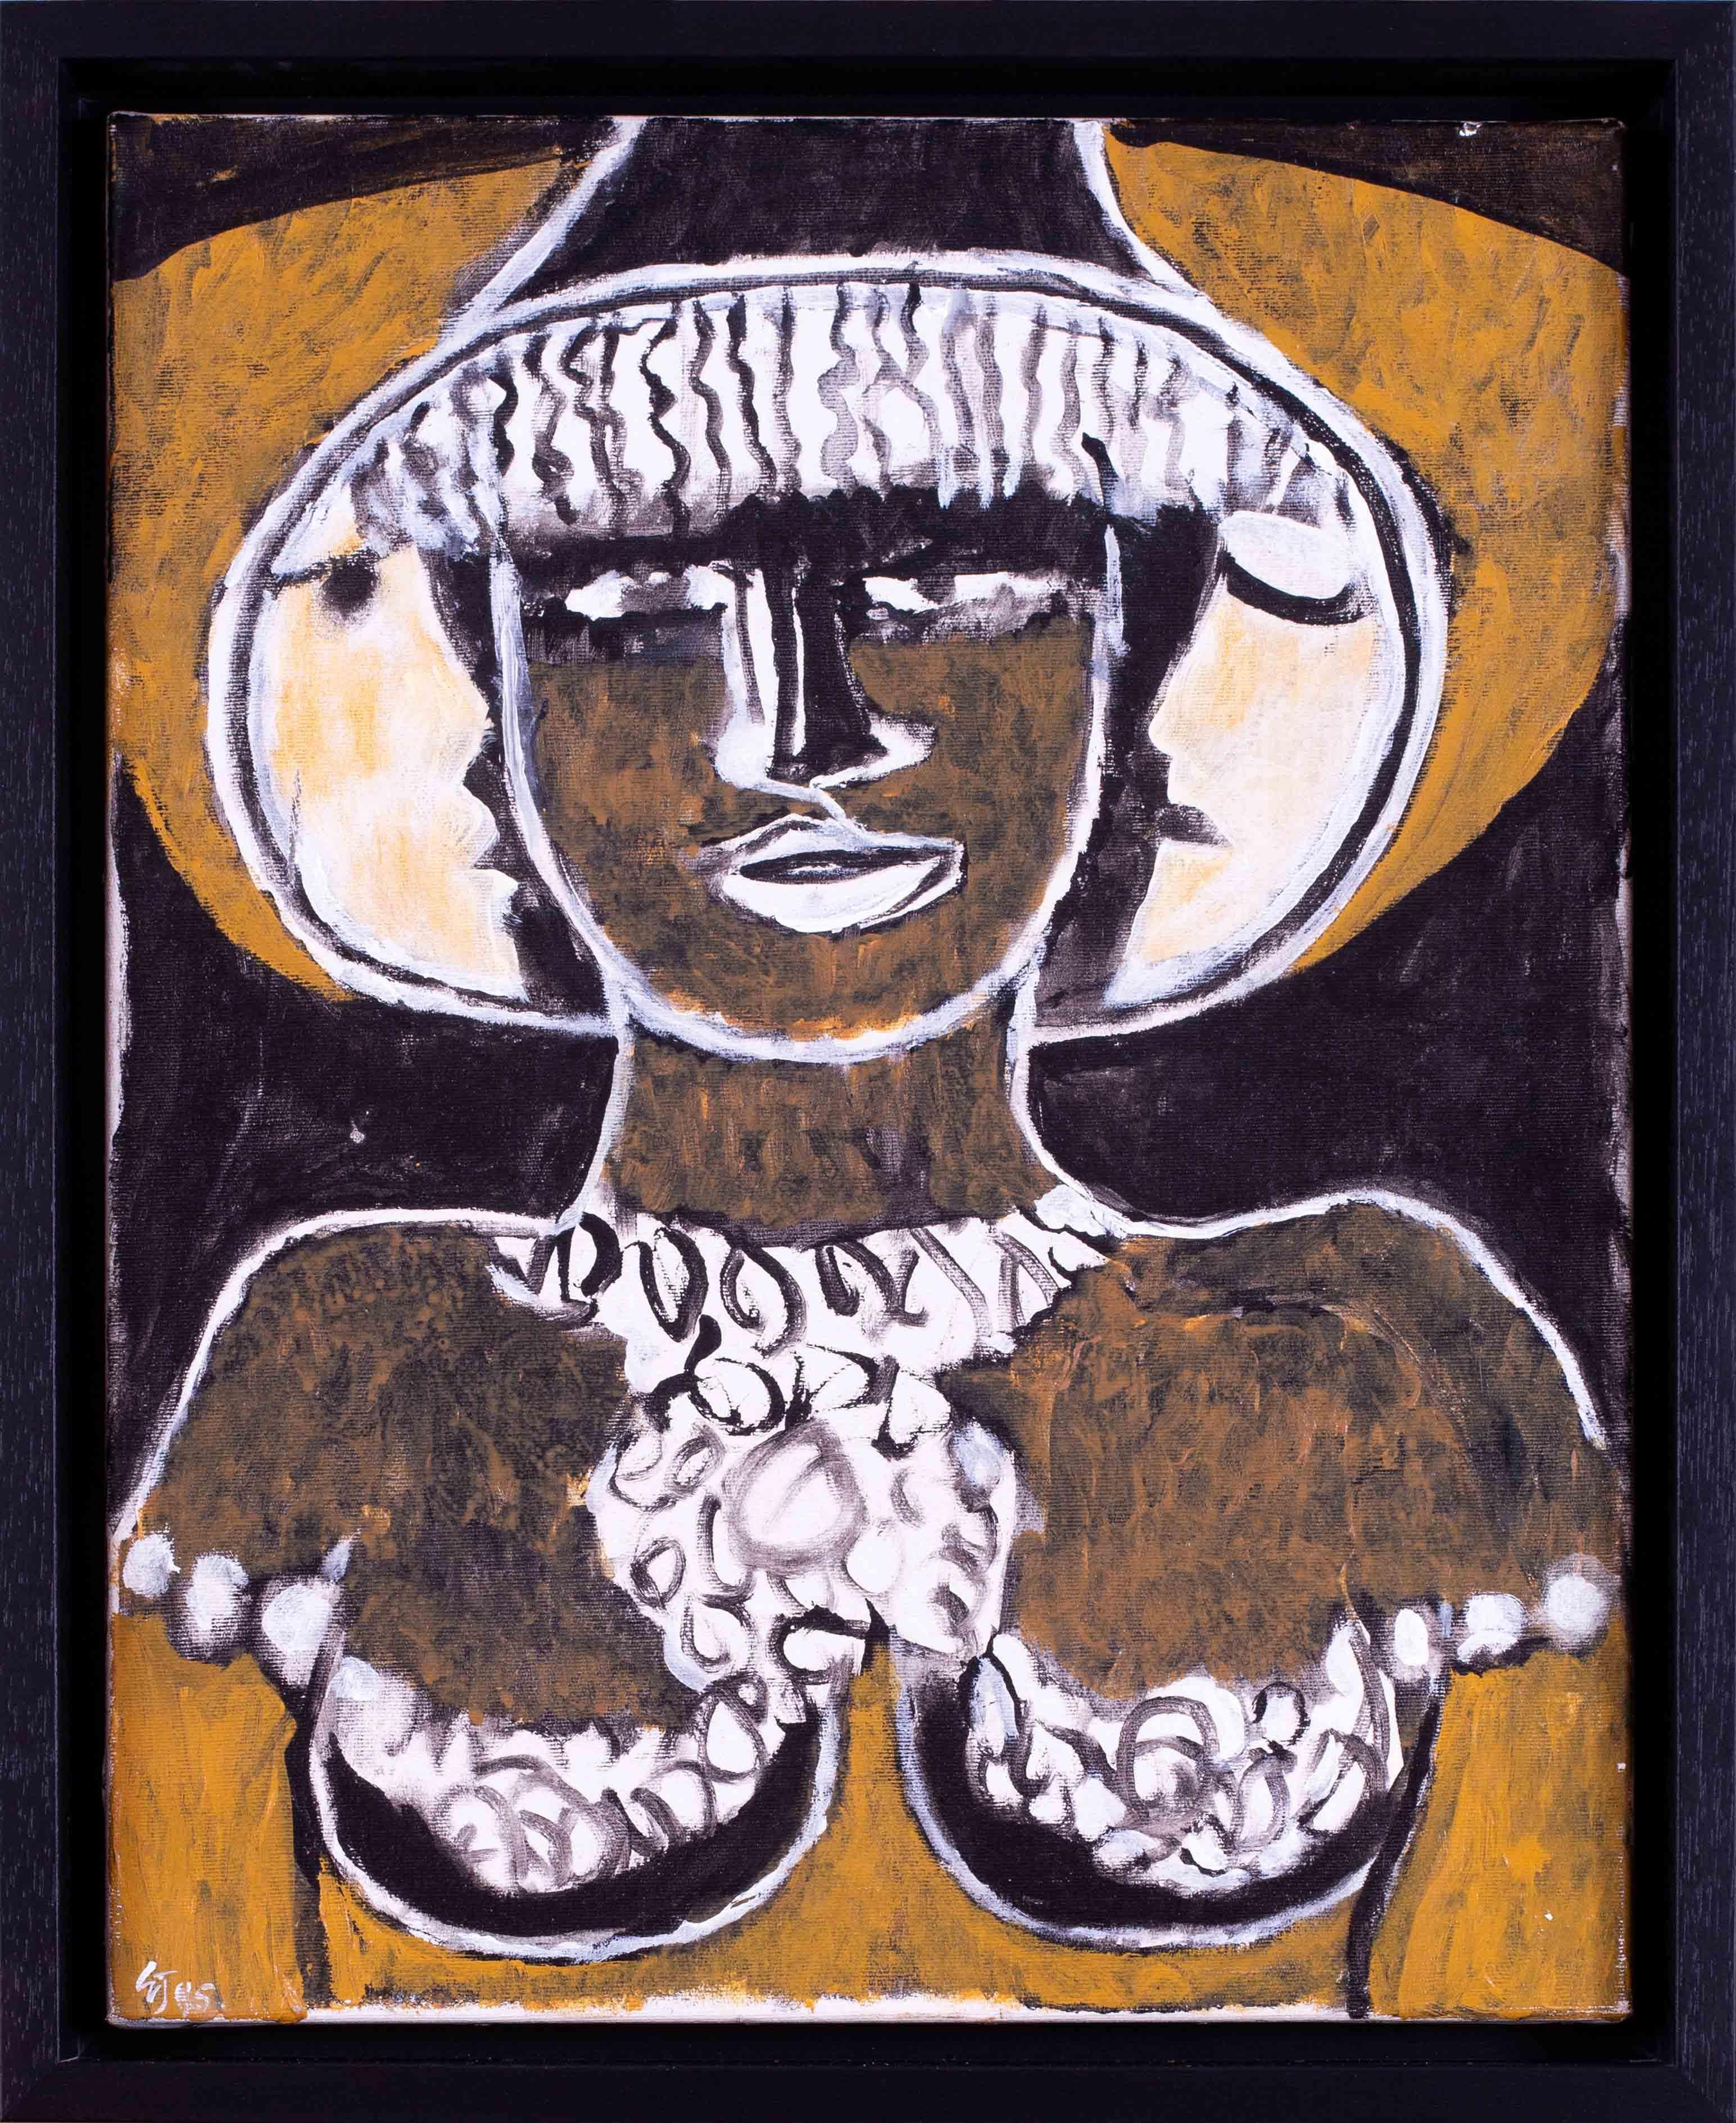 Portrait abstrait saisissant de l'artiste Modern British Ewart Johns "Black hecate".